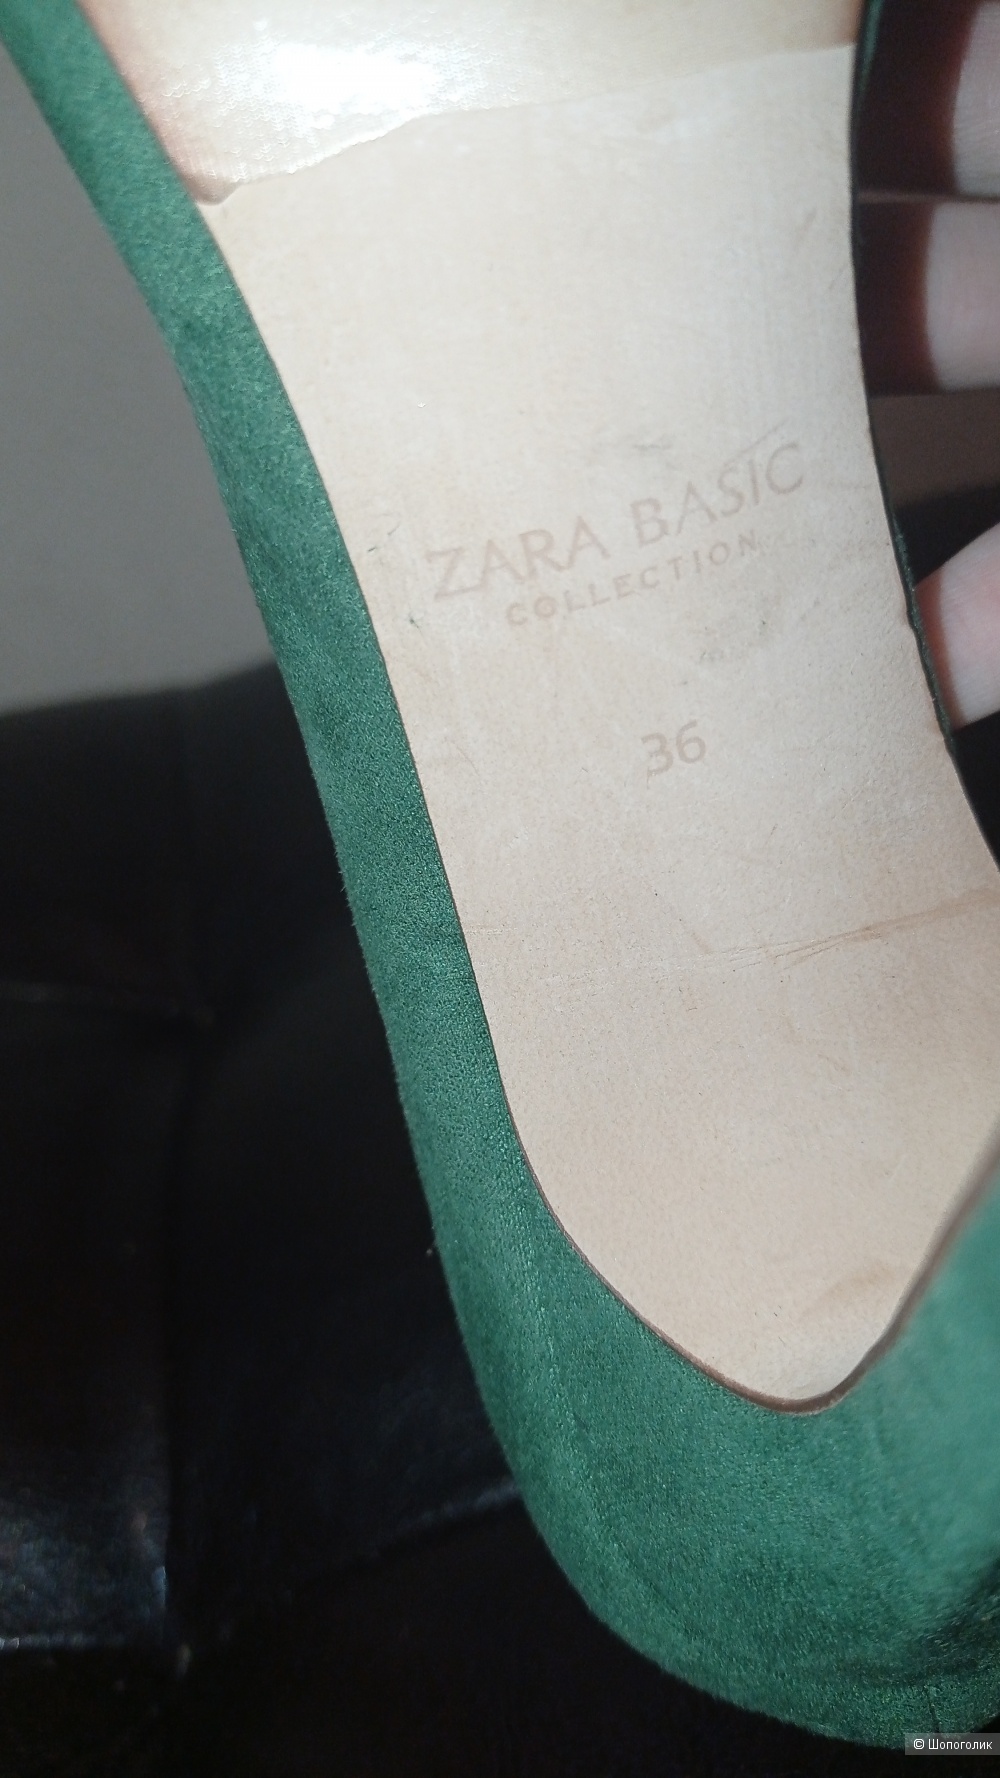 Туфли Zara basic collection 36 размер